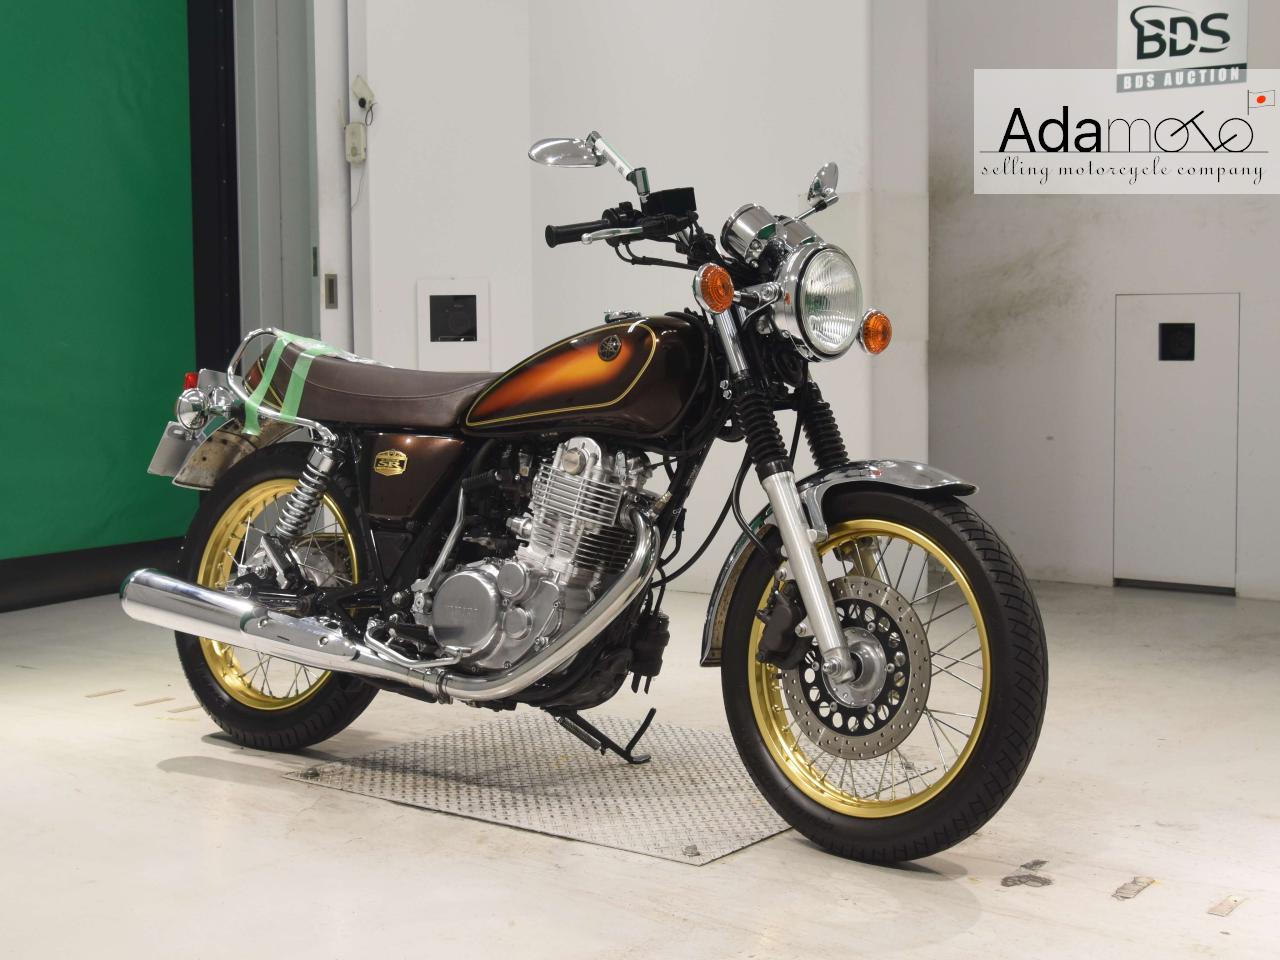 Yamaha SR400 5 - Adamoto - Motorcycles from Japan